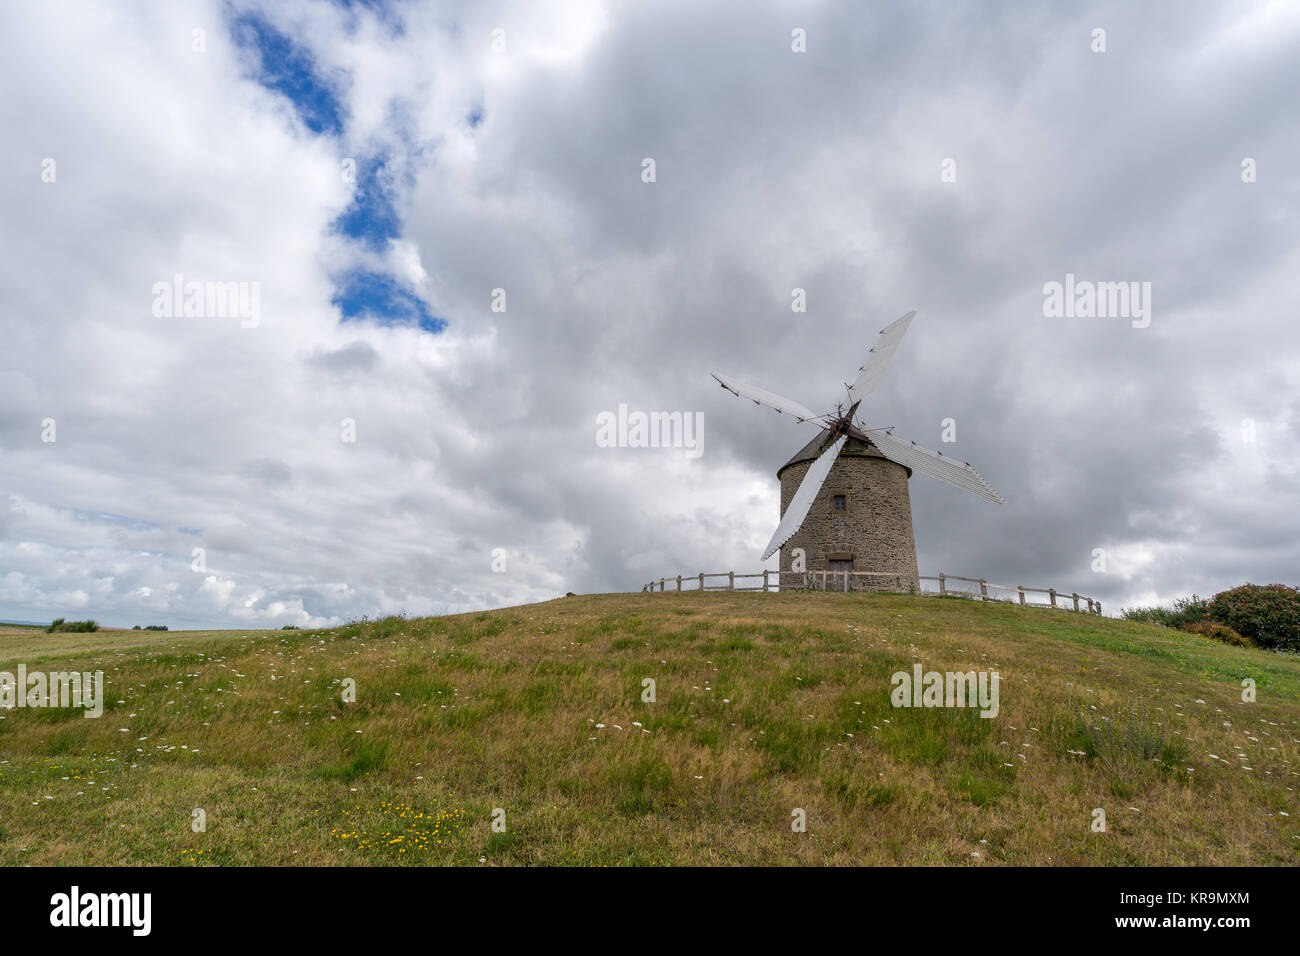 Windmühle, Getreide, Felder, historisch, Korn, Mahlen, Müller Banque D'Images